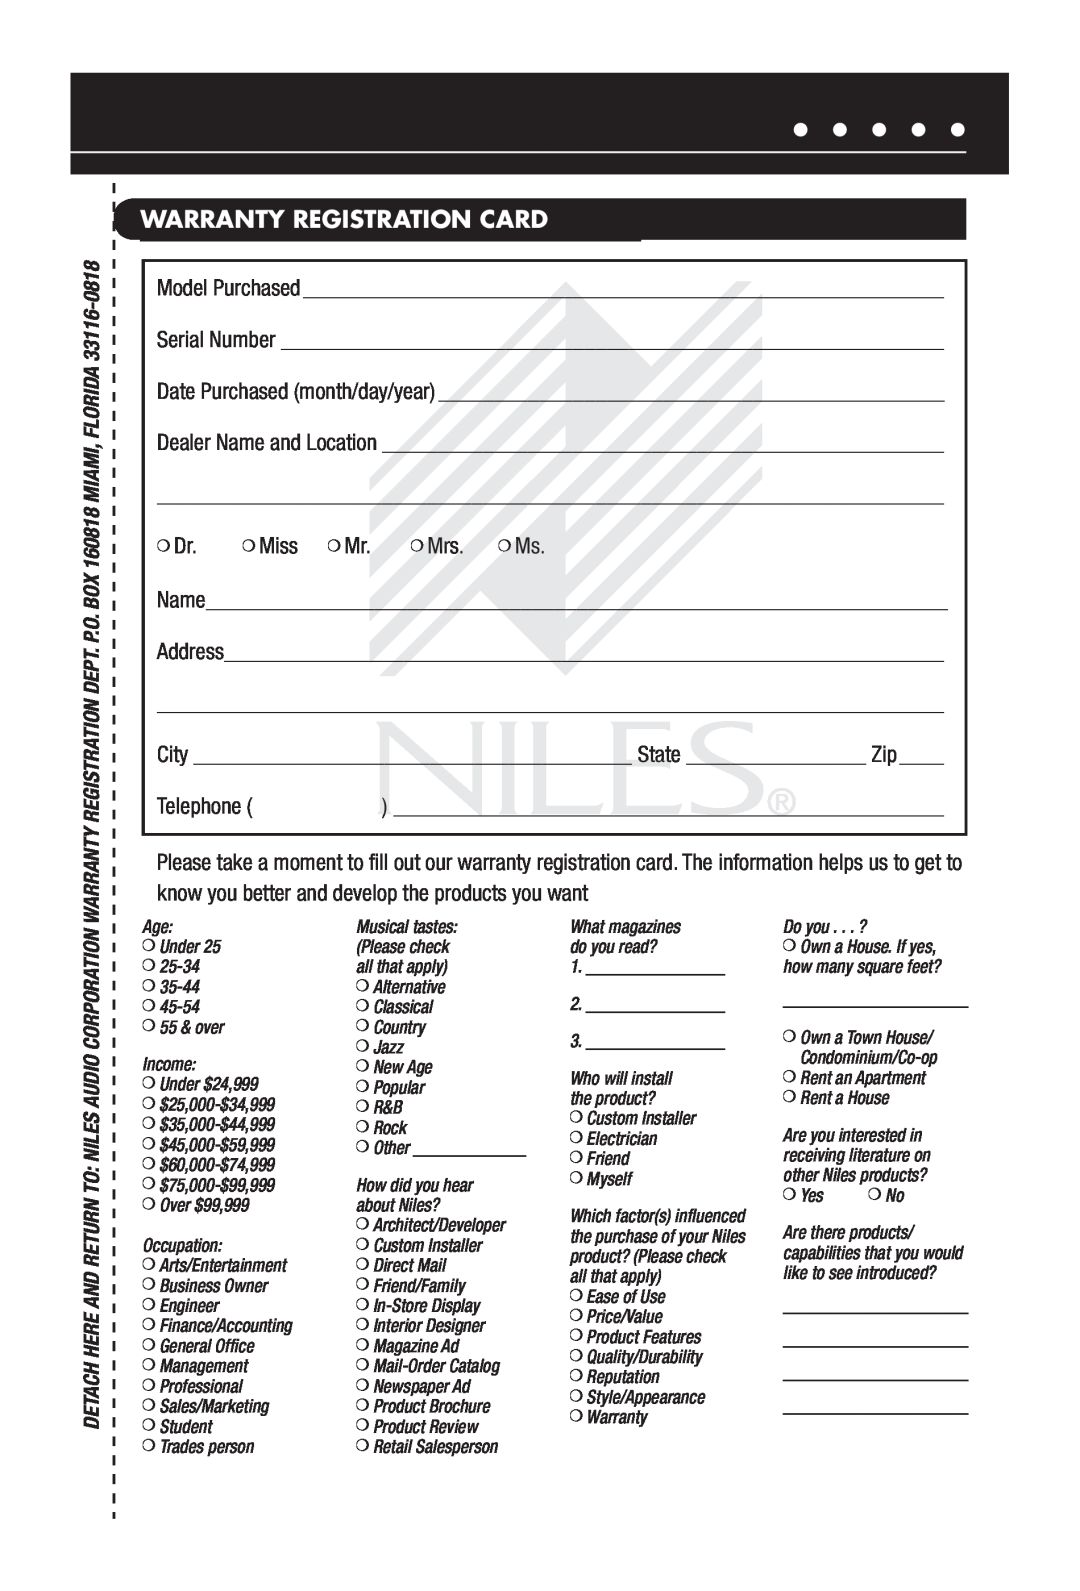 Niles Audio SAS-1 manual Warranty Registration Card, Dr. Miss Mr. Mrs. Ms, Telephone 